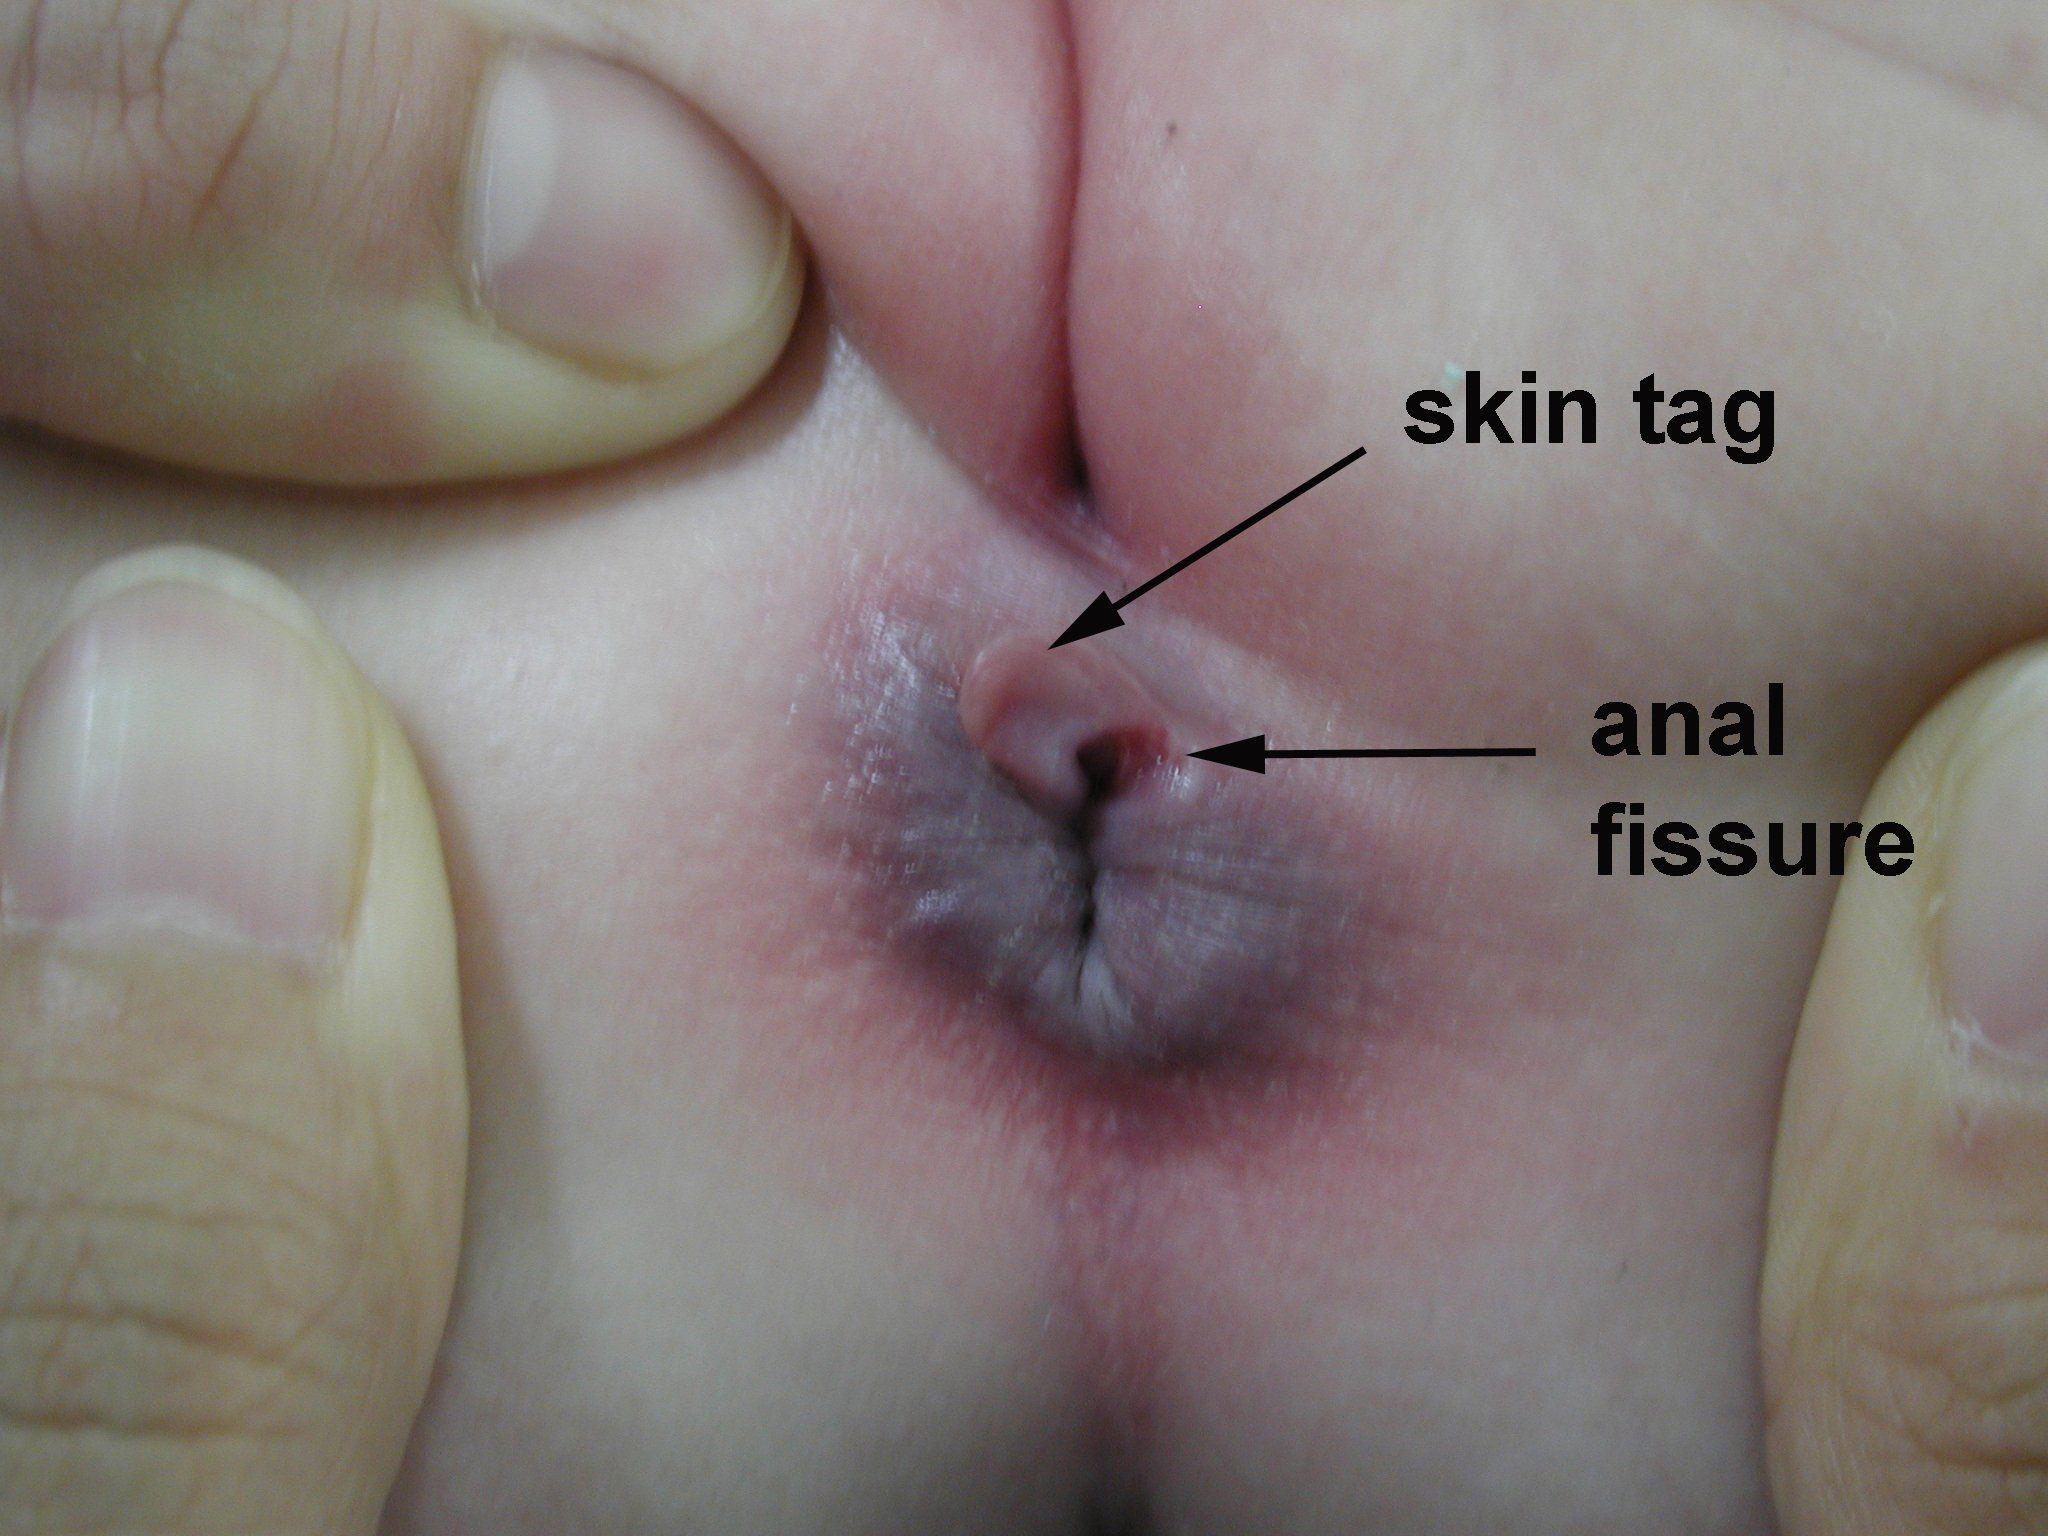 Vulva skin tag pictures